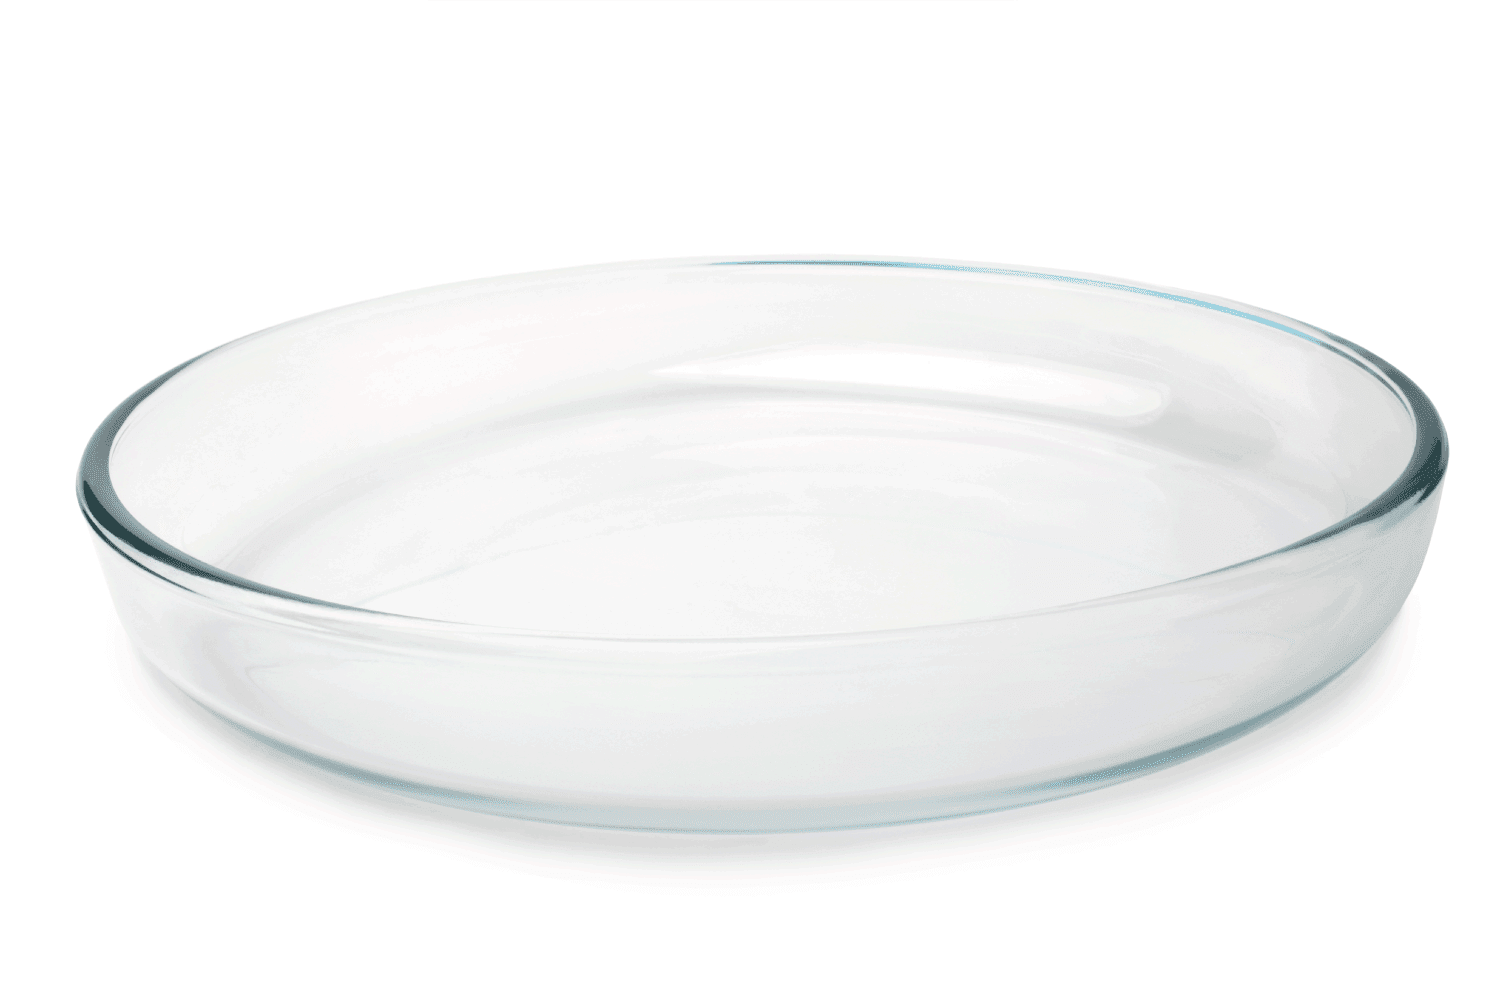 Round glass baking tray on white background